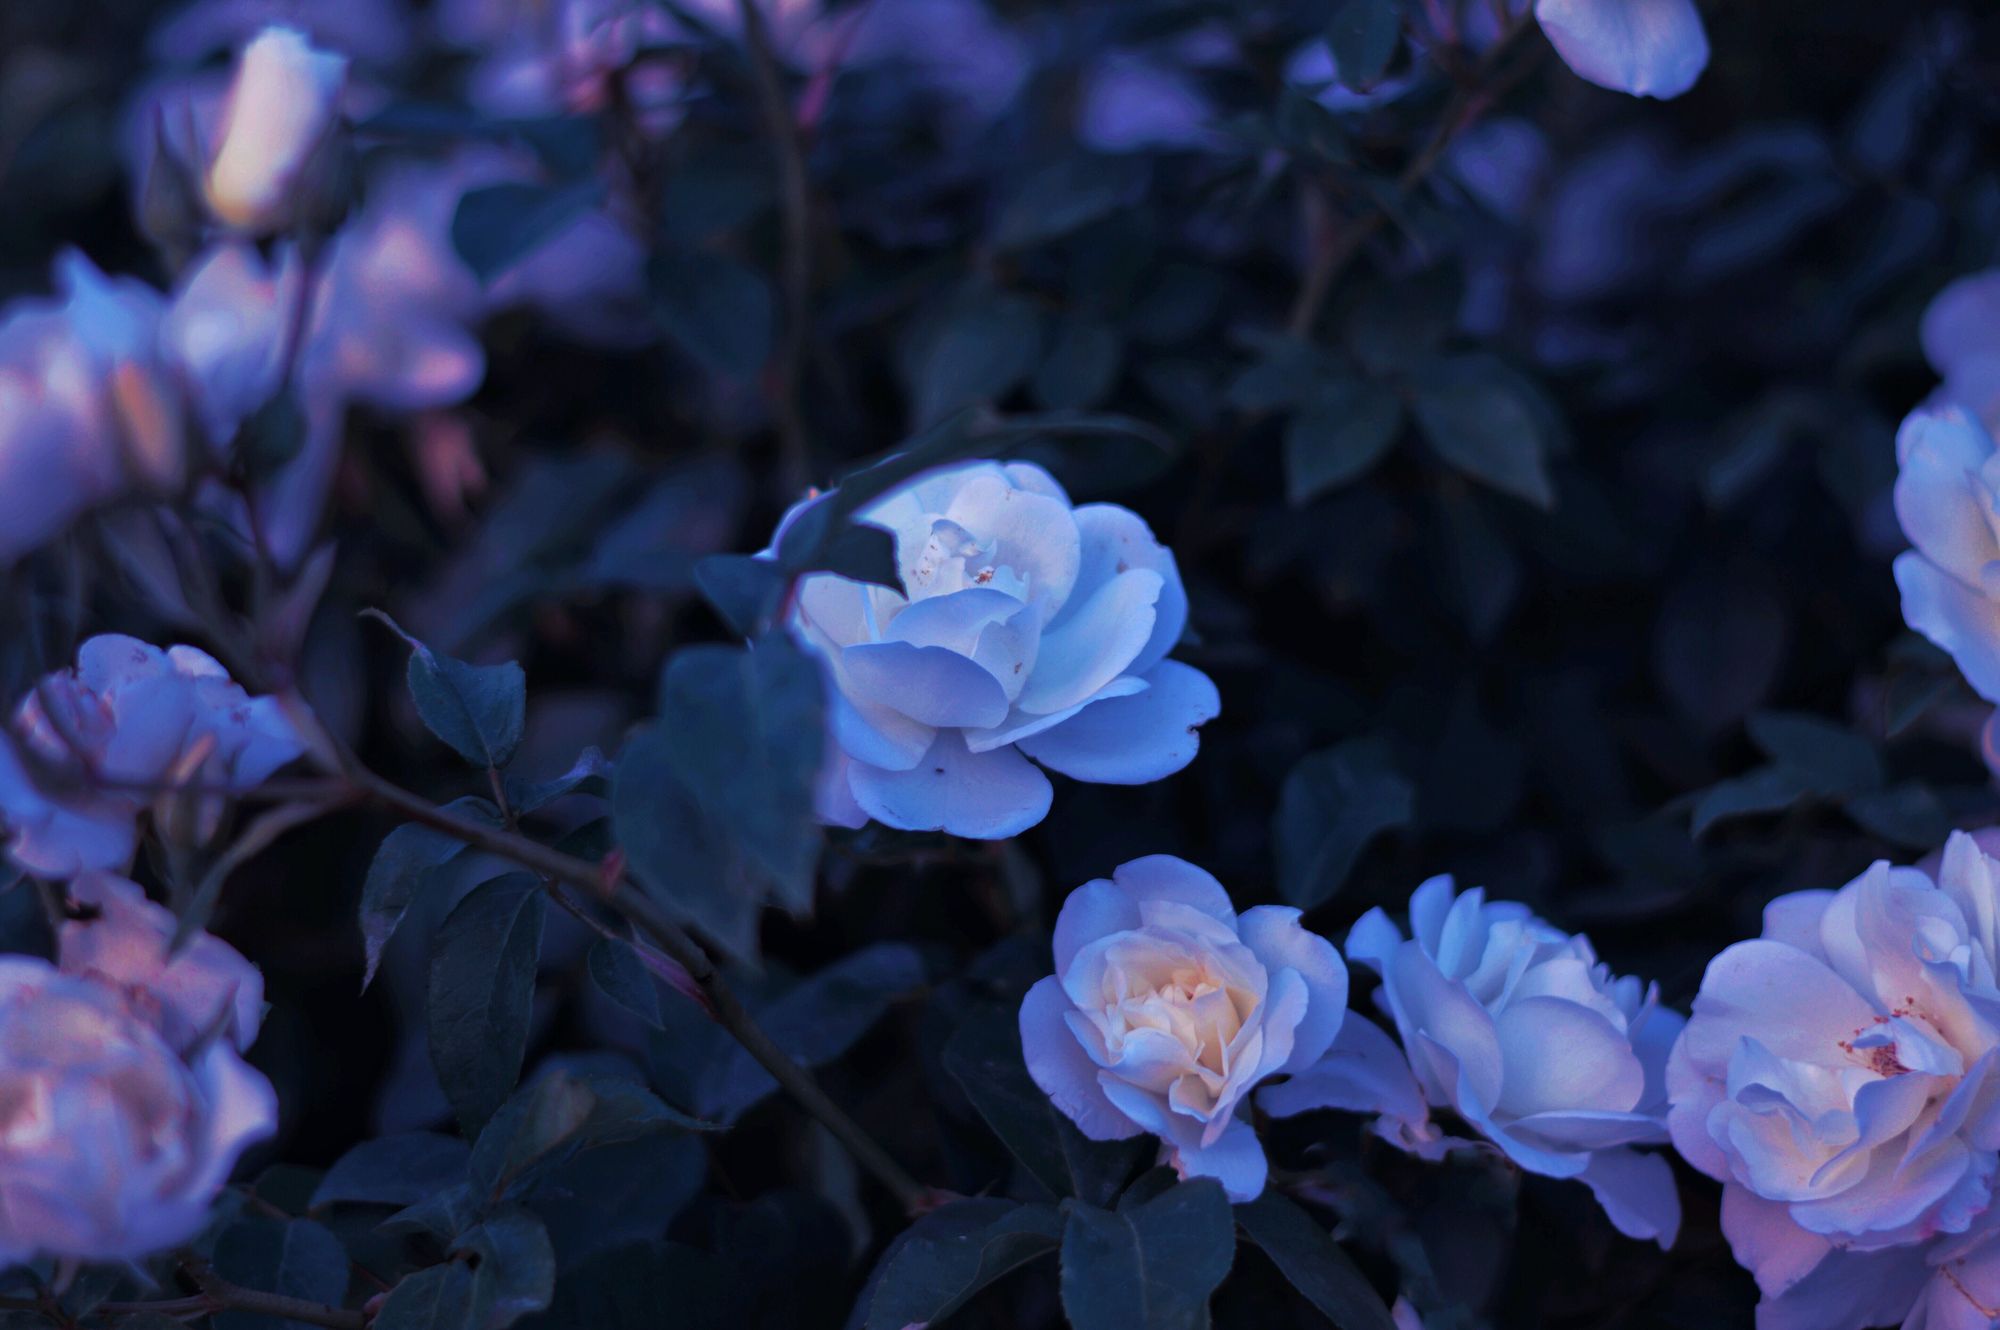 Photograph of many bluish purple flowers